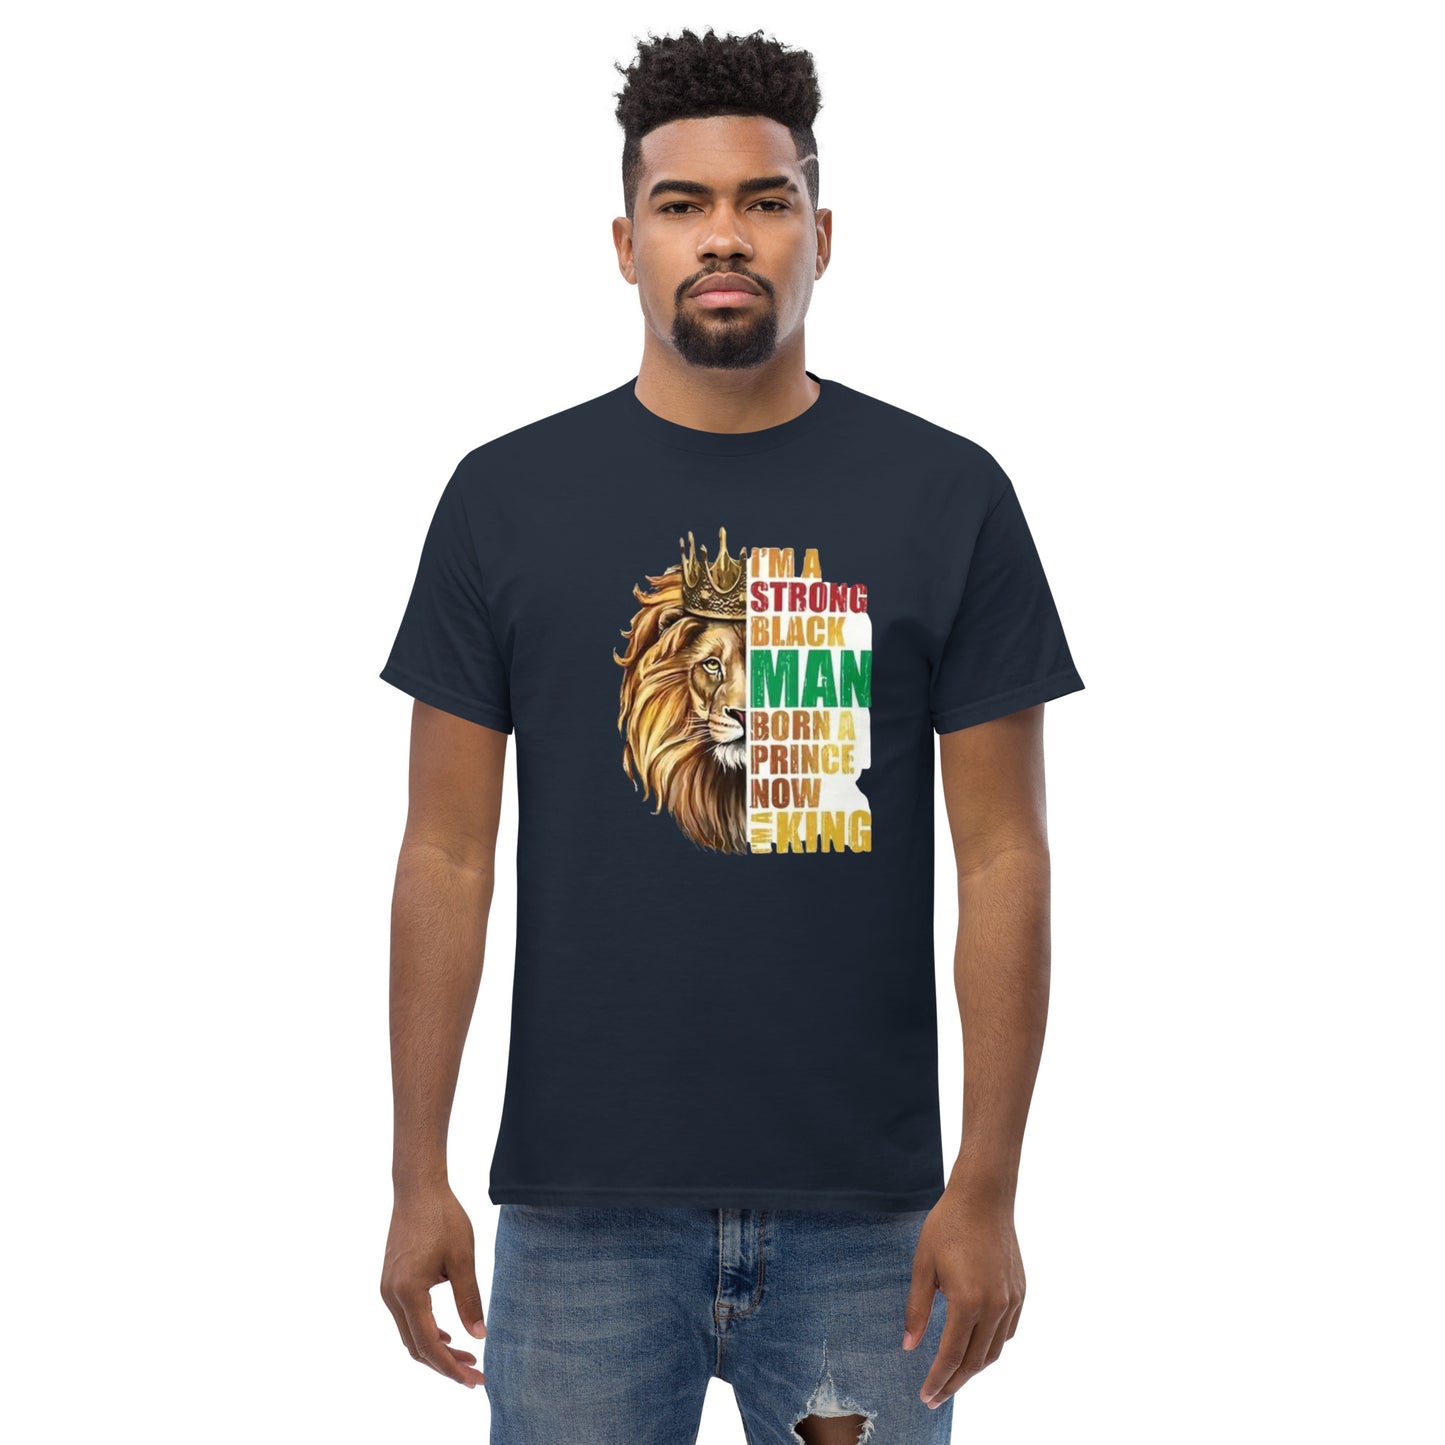 Men's T-Shirt:  I'm Strong Black Man Born A Prince Now I'm A King